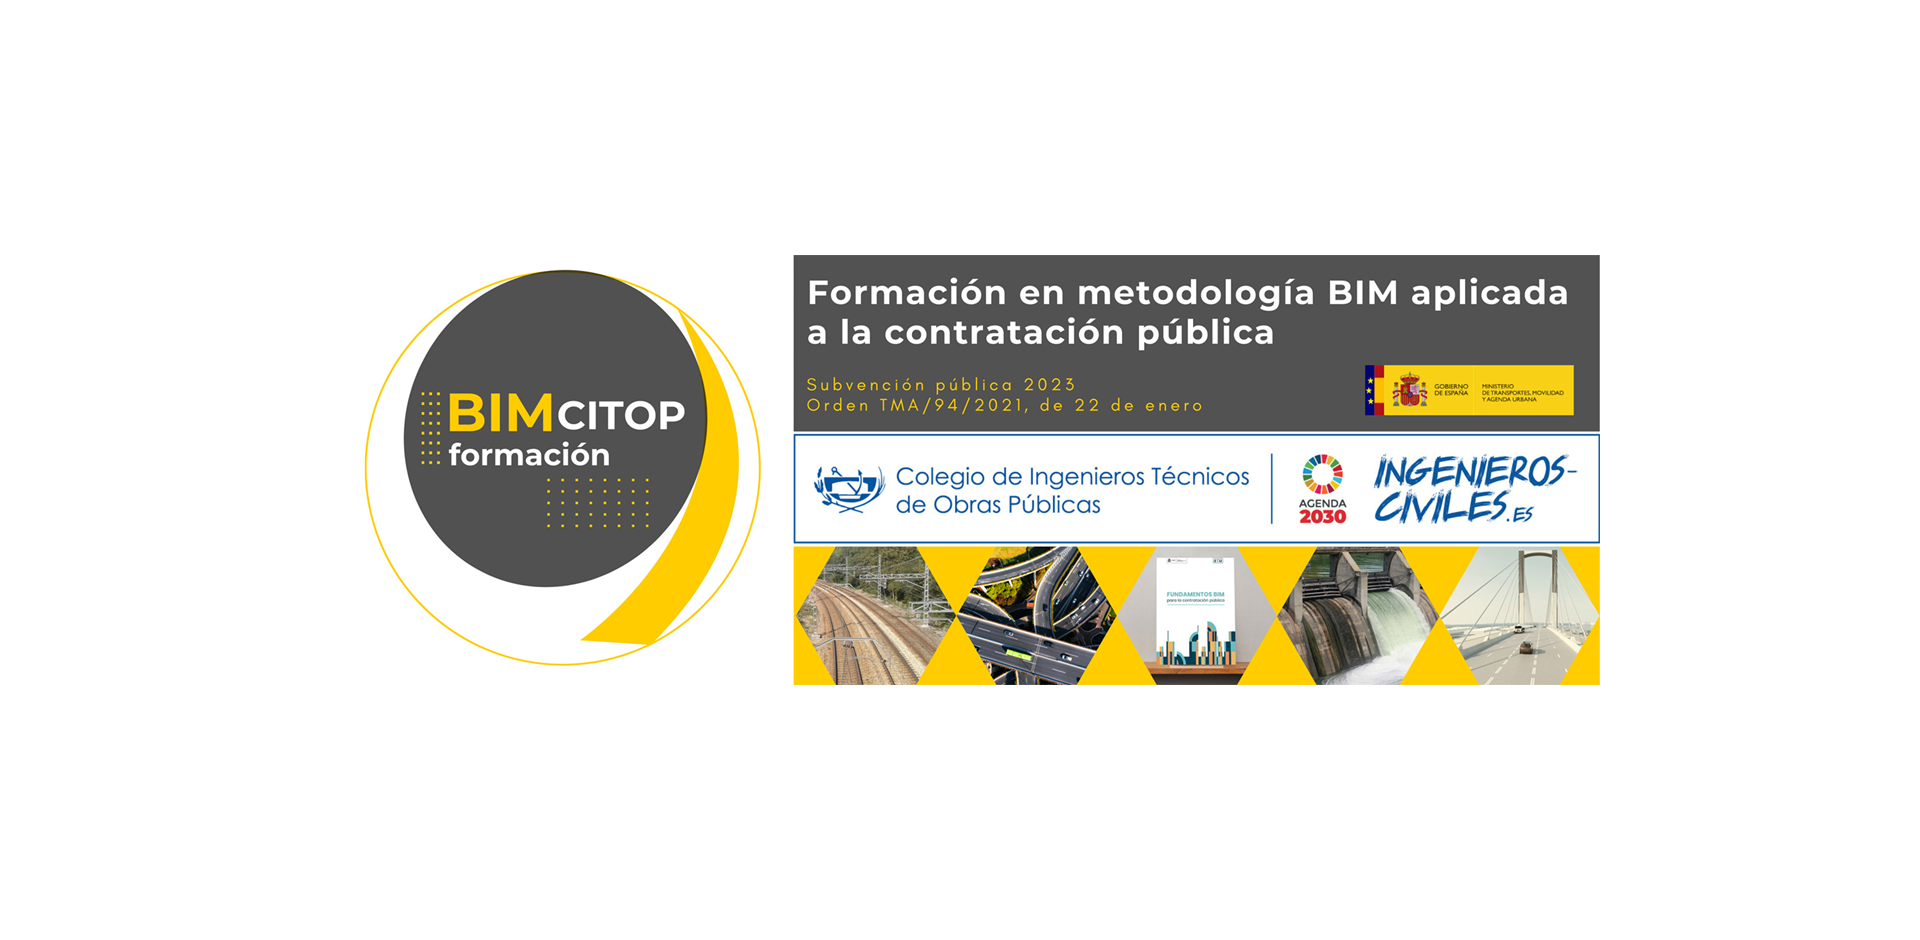 INGECID participates in the conference “BIM methodology applied to public procurement”